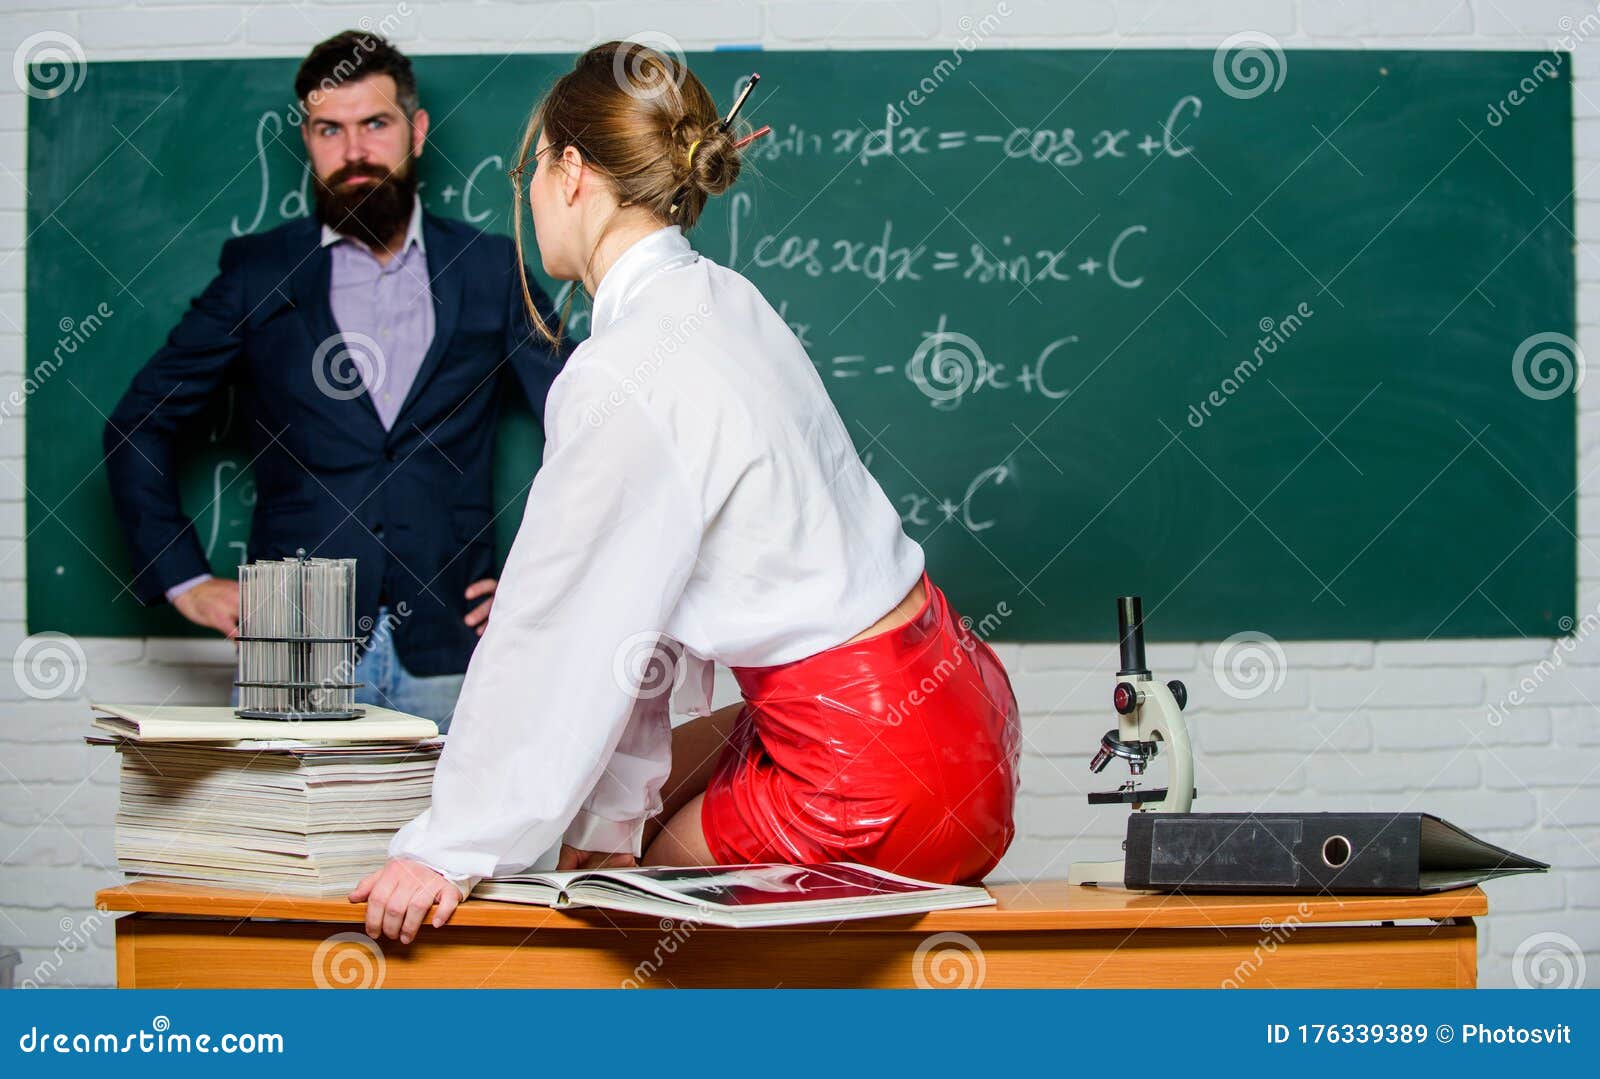 Everyone Dreaming About Such Teacher Attractive Teacher In Leather Skirt Cheeky Teacher